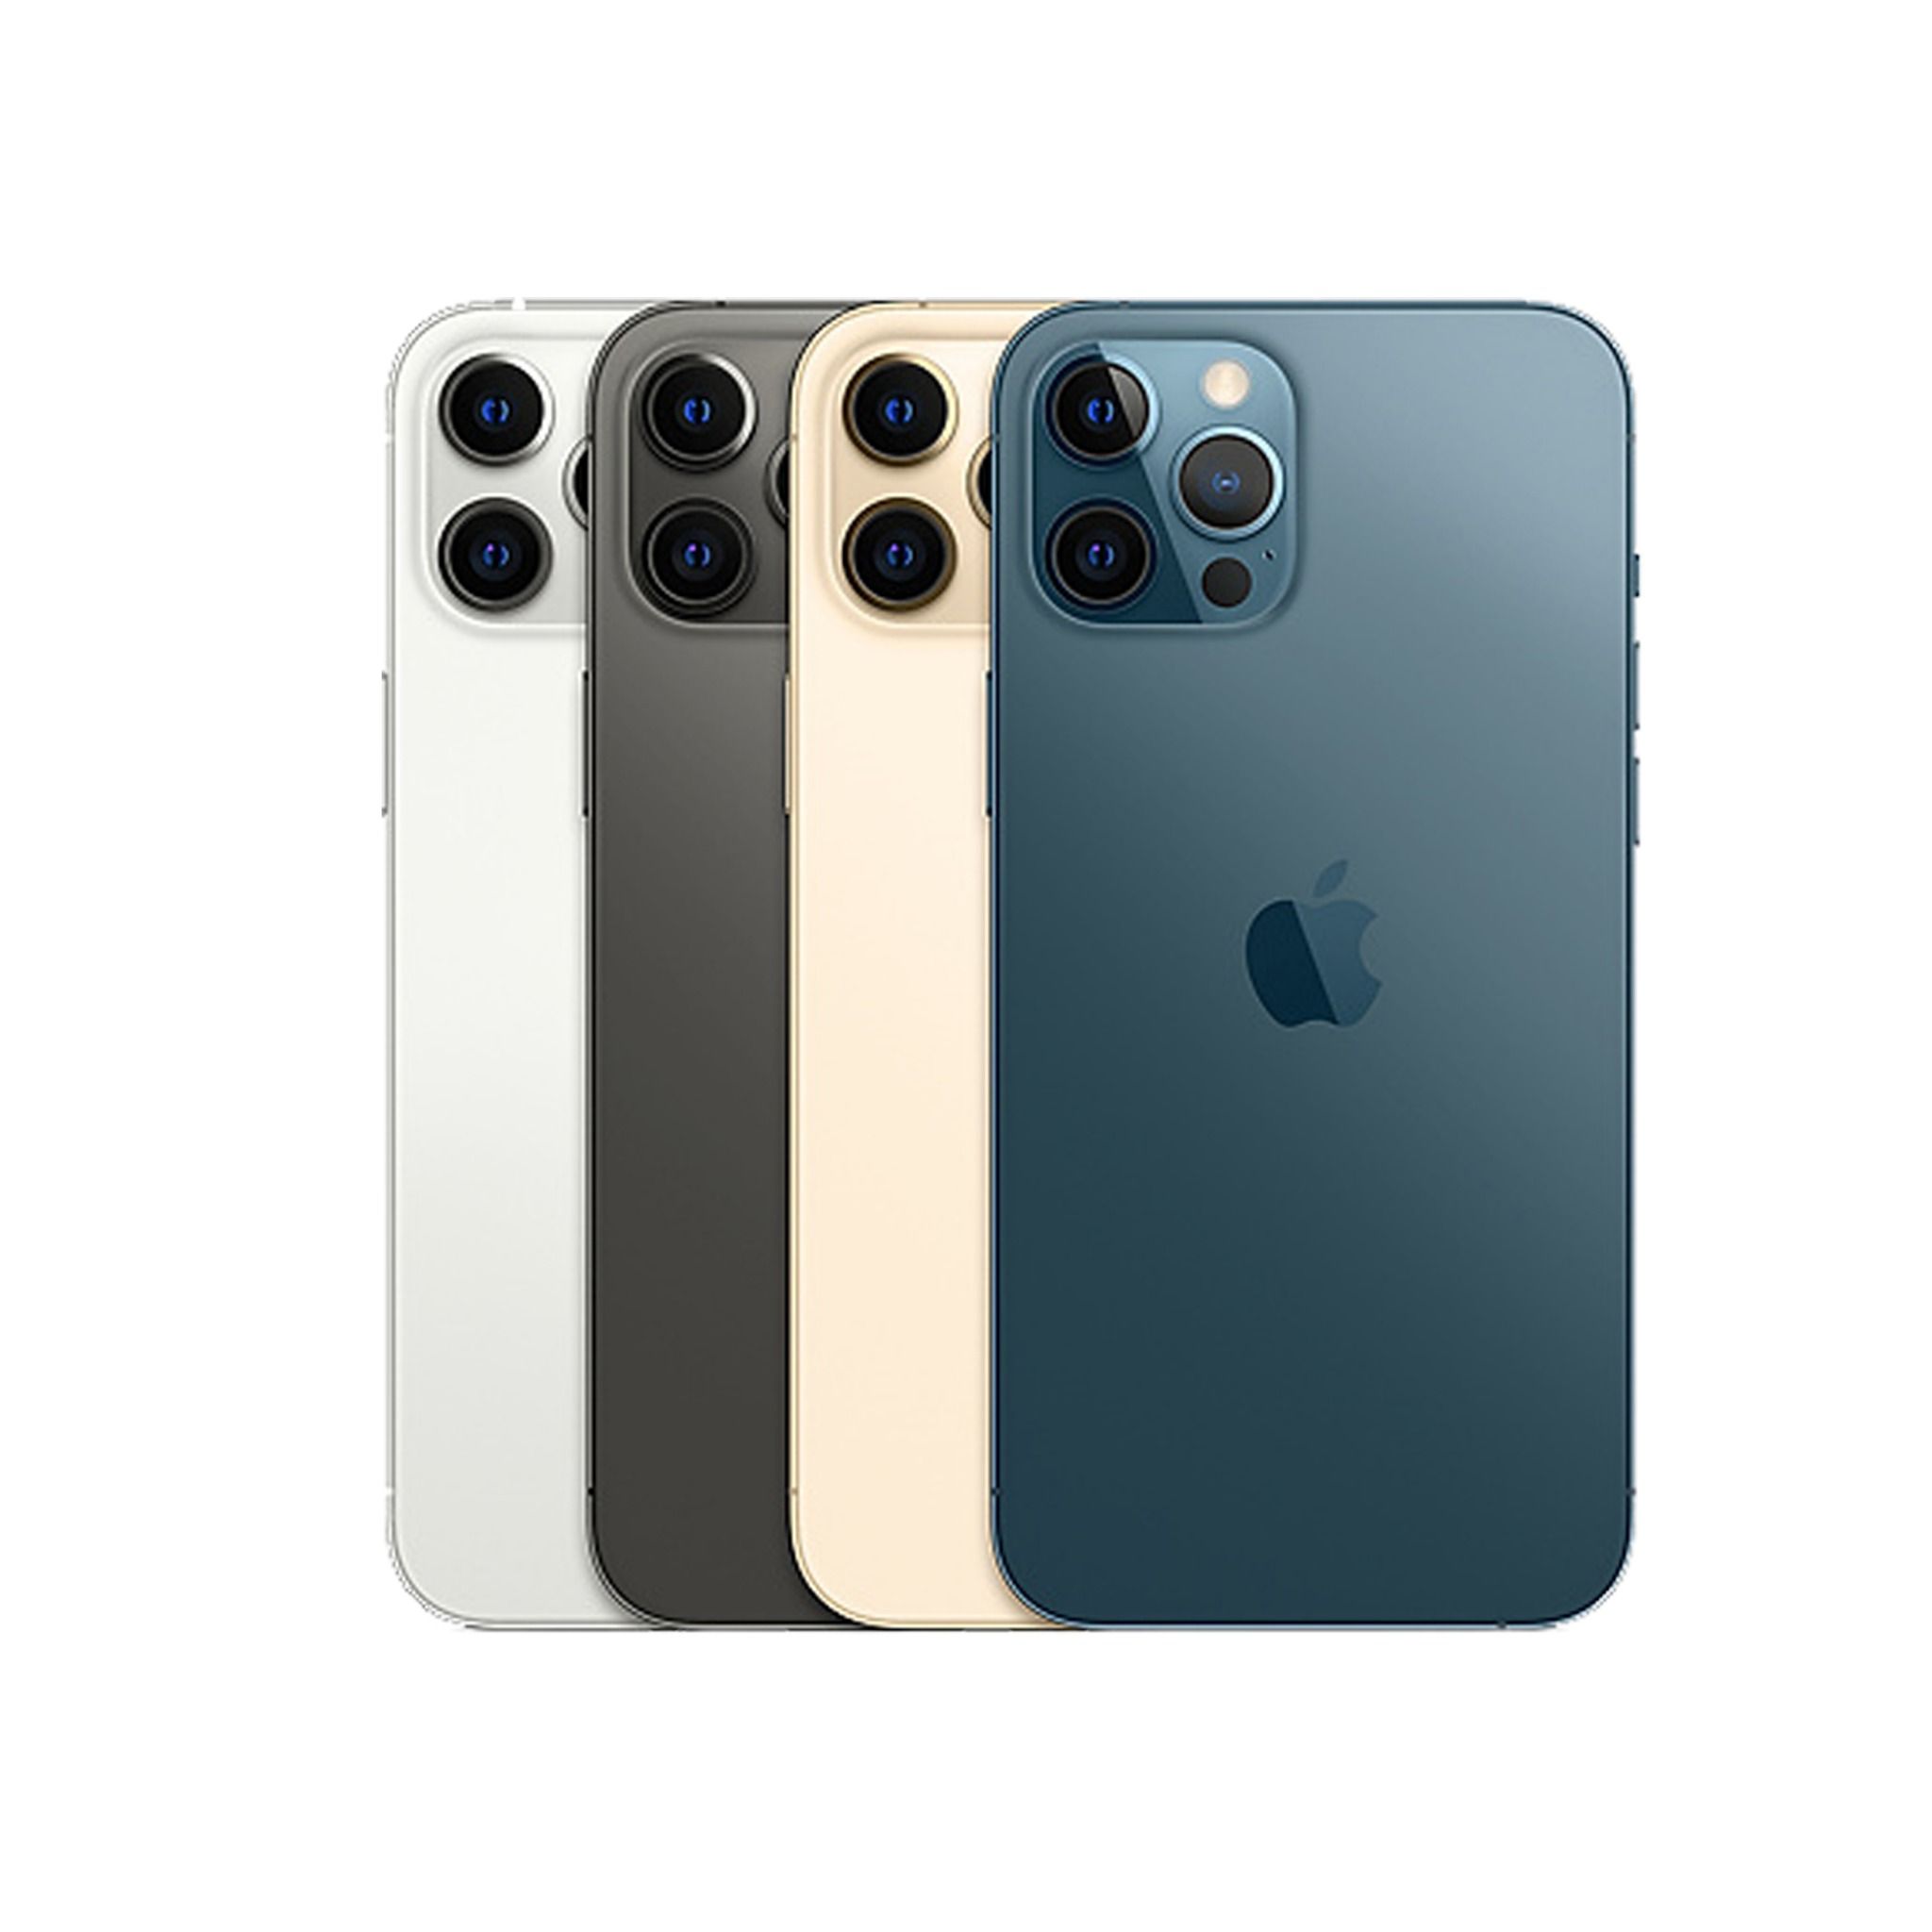 iPhone 12 Pro 128GB Quốc Tế - Đã Qua Sử Dụng